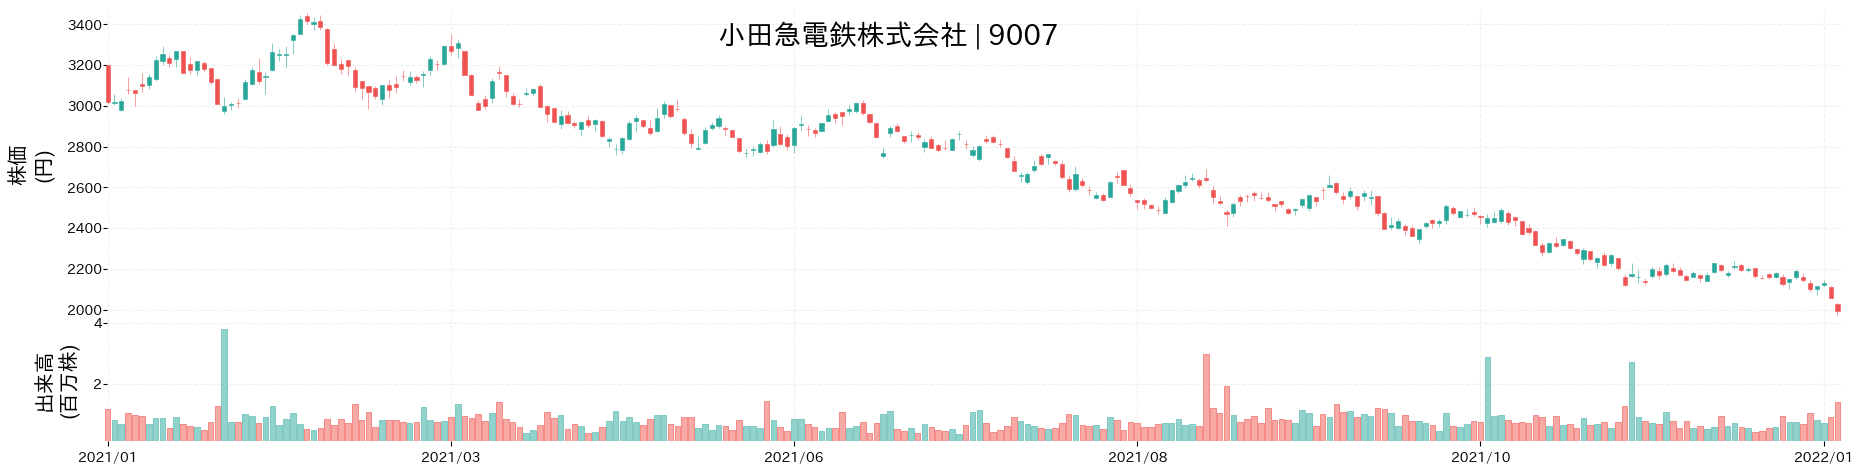 小田急電鉄の株価推移(2021)